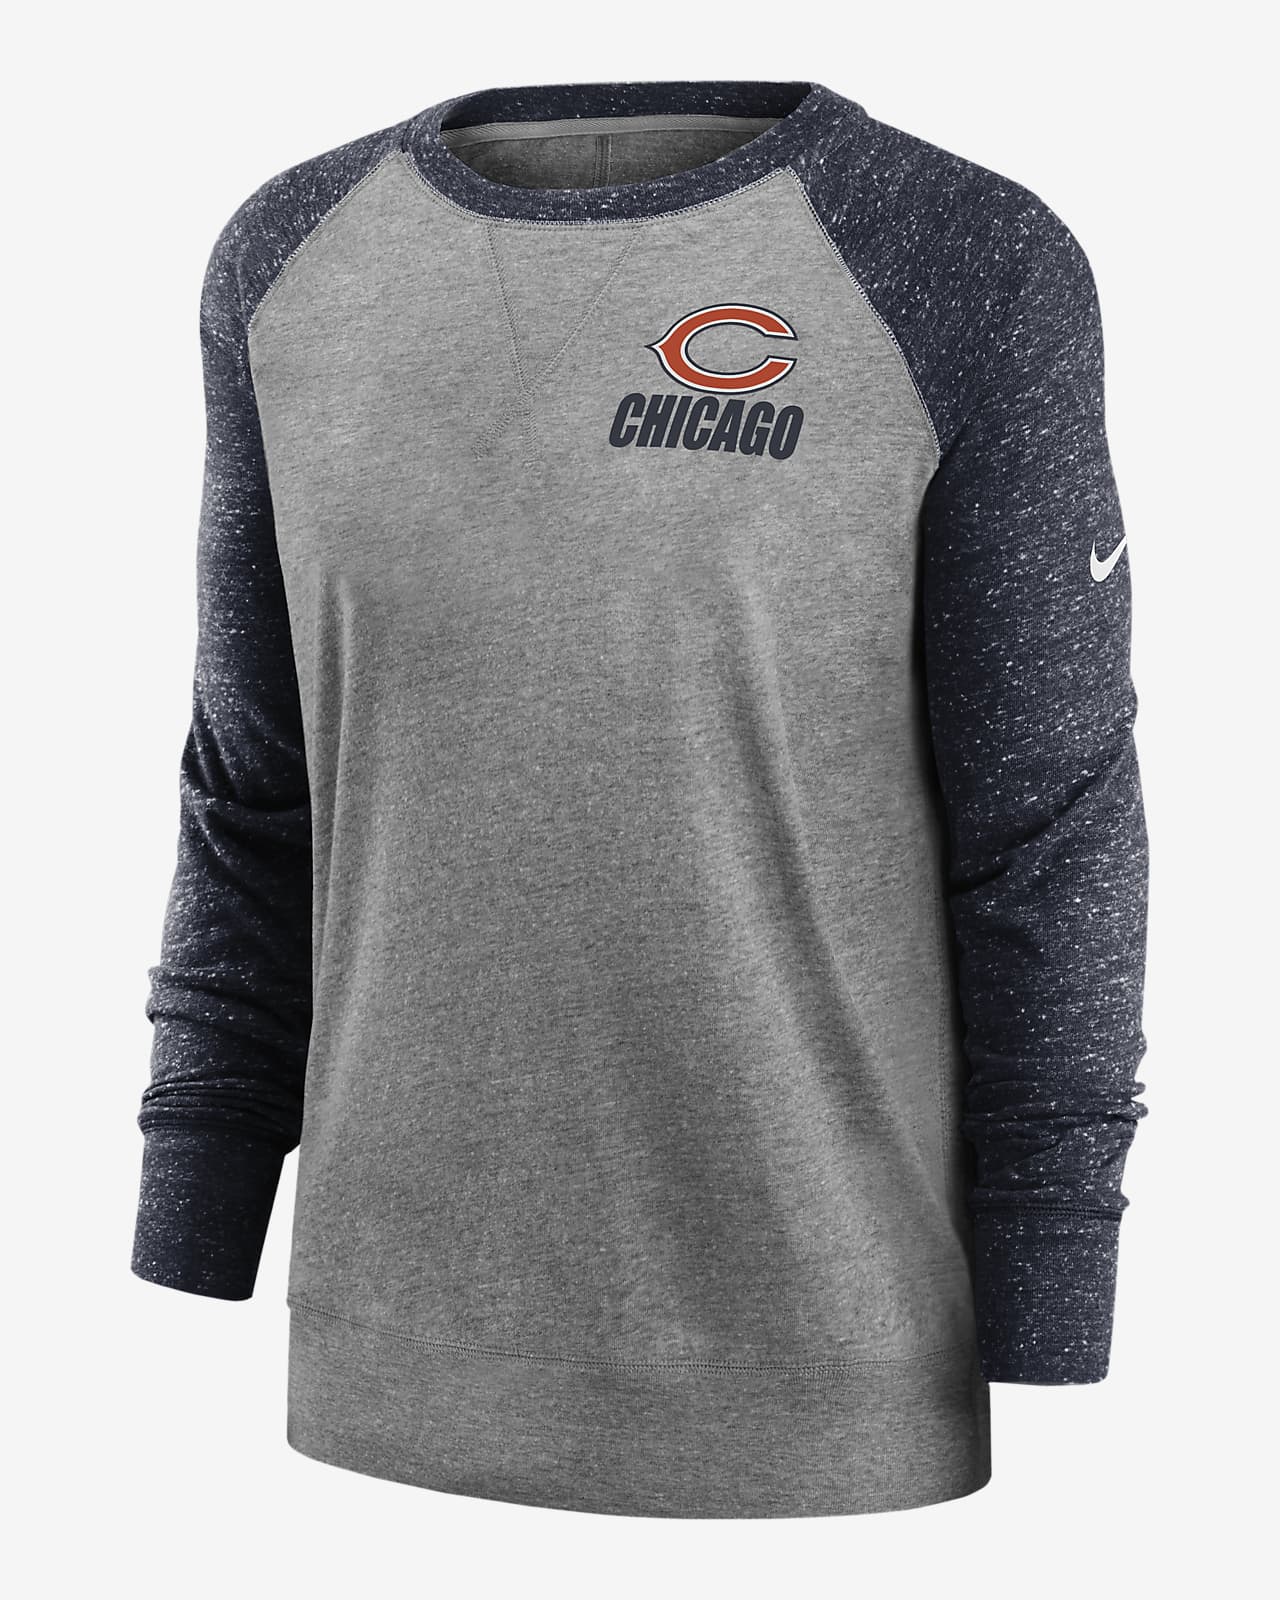 chicago bears sweatshirts for women